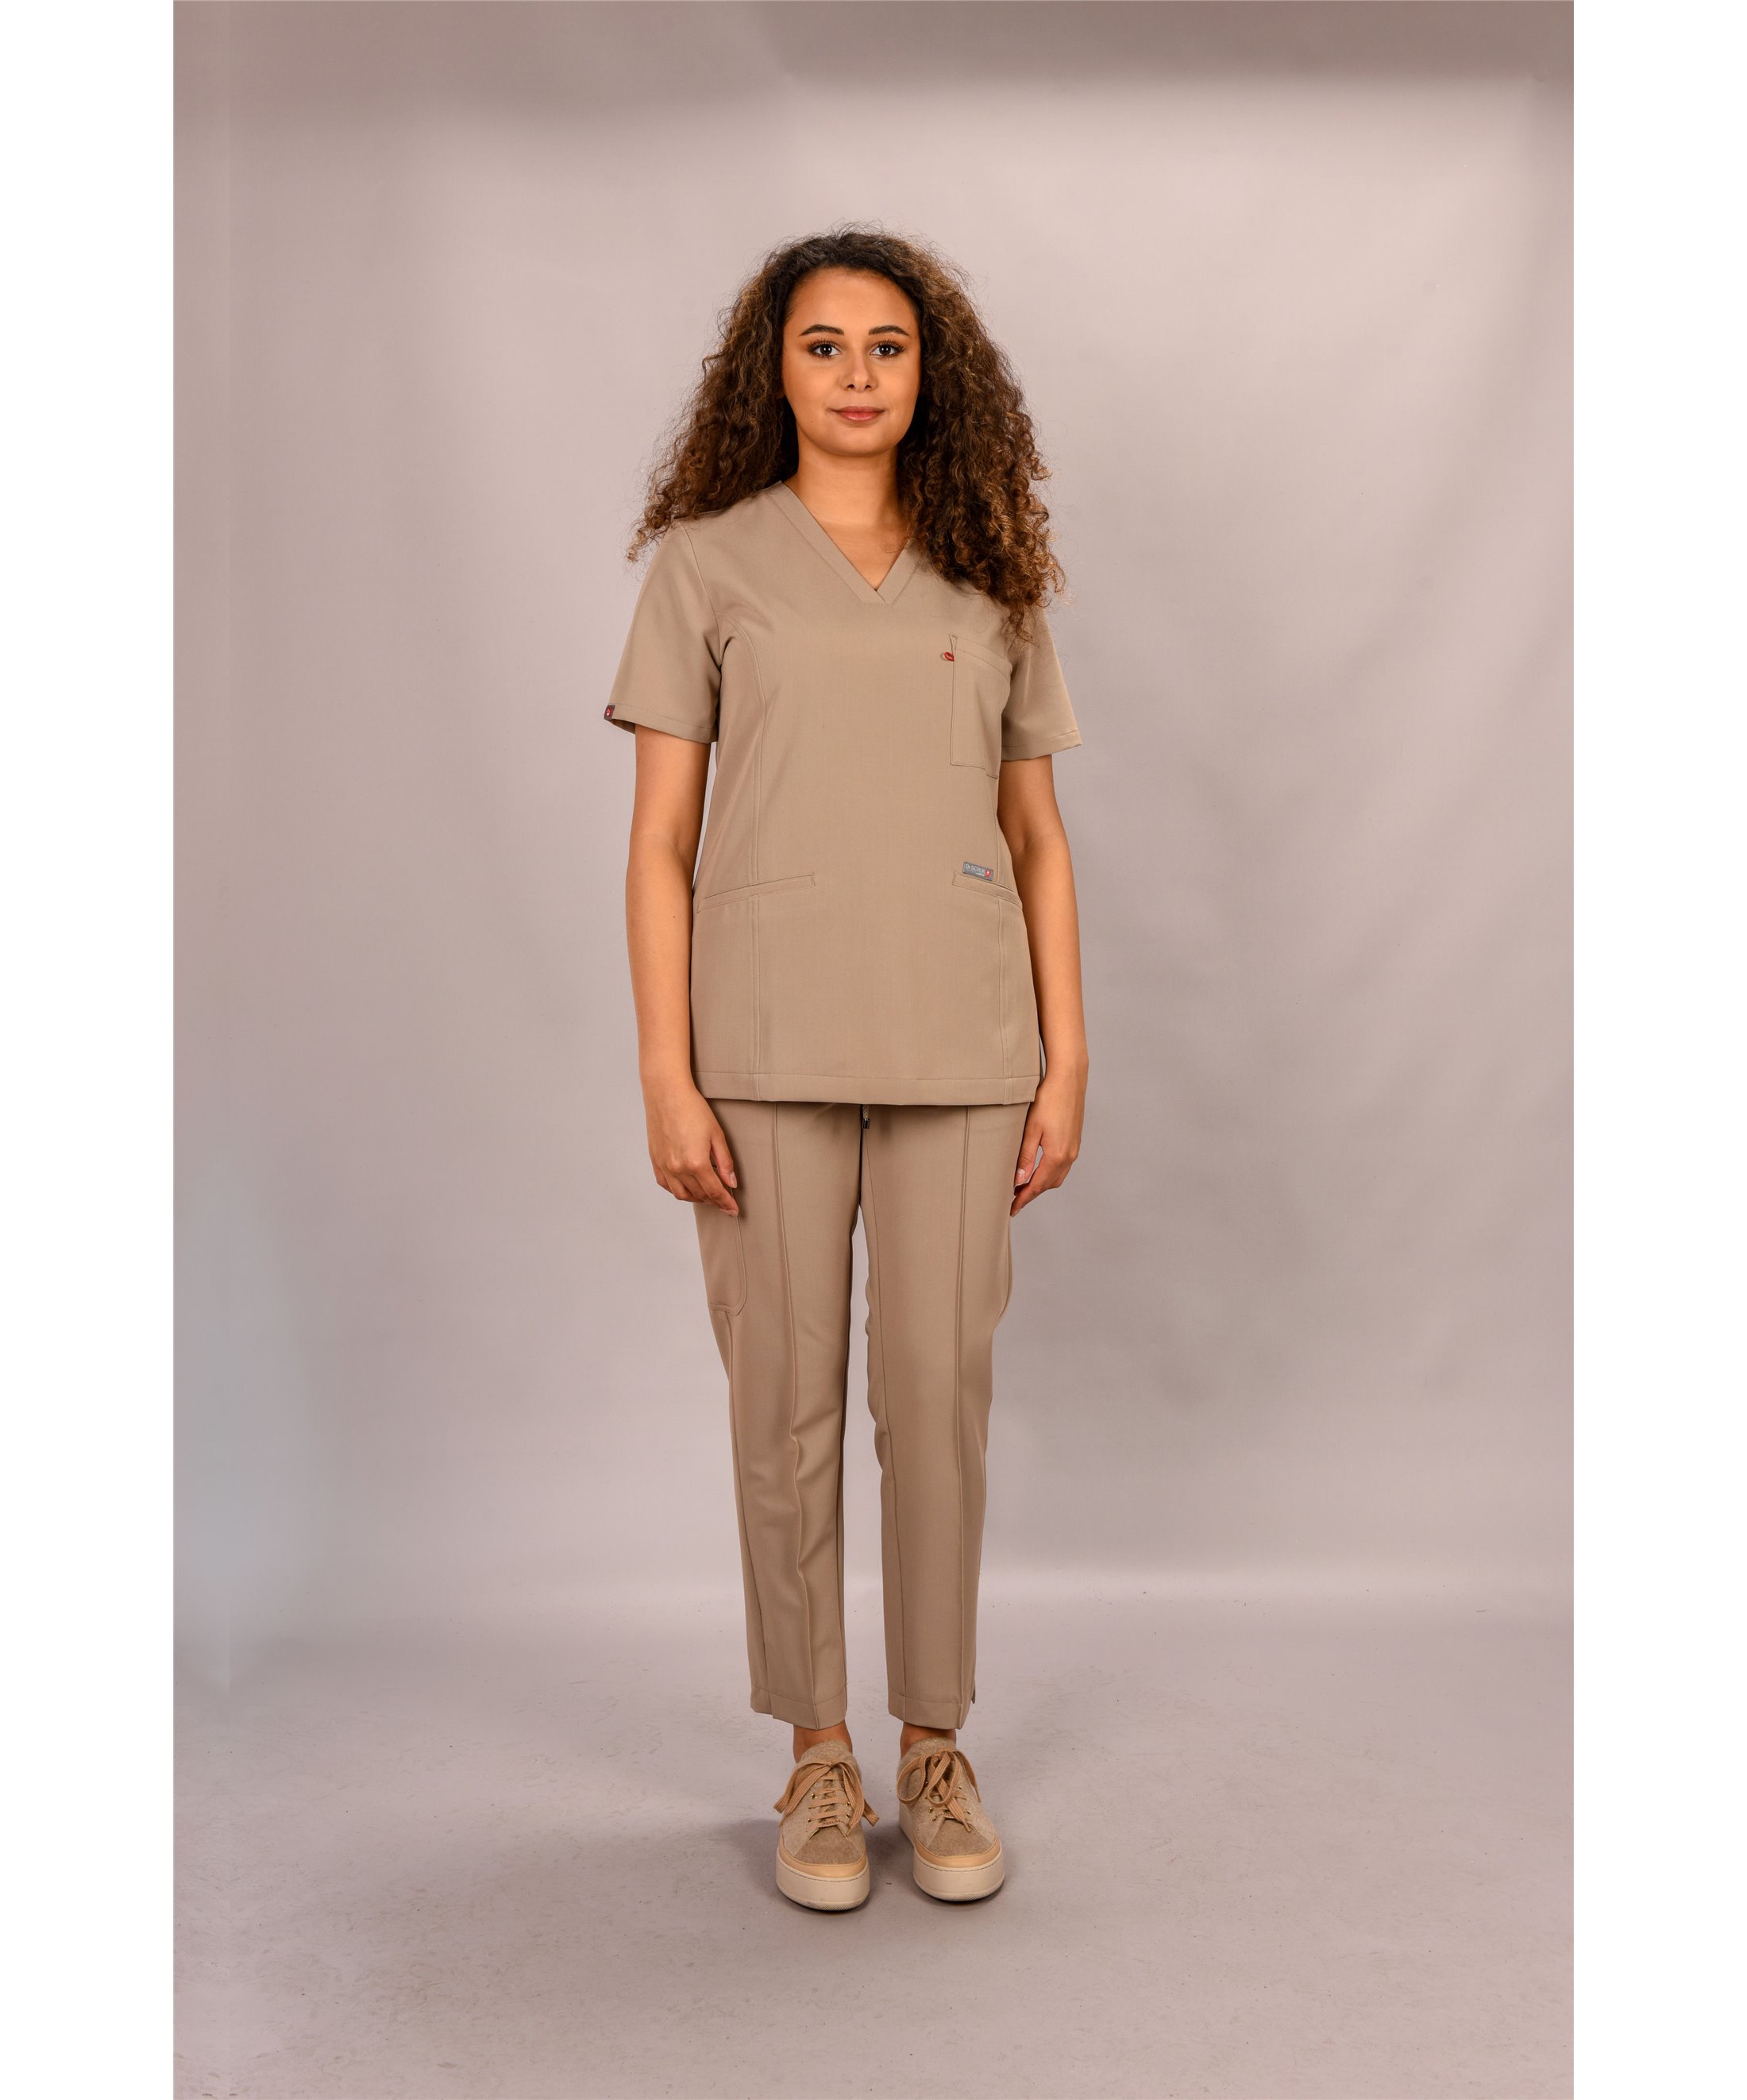 Komplet medyczny soft (Bluza MARY SOFT + Spodnie CLASSIC SOFT)